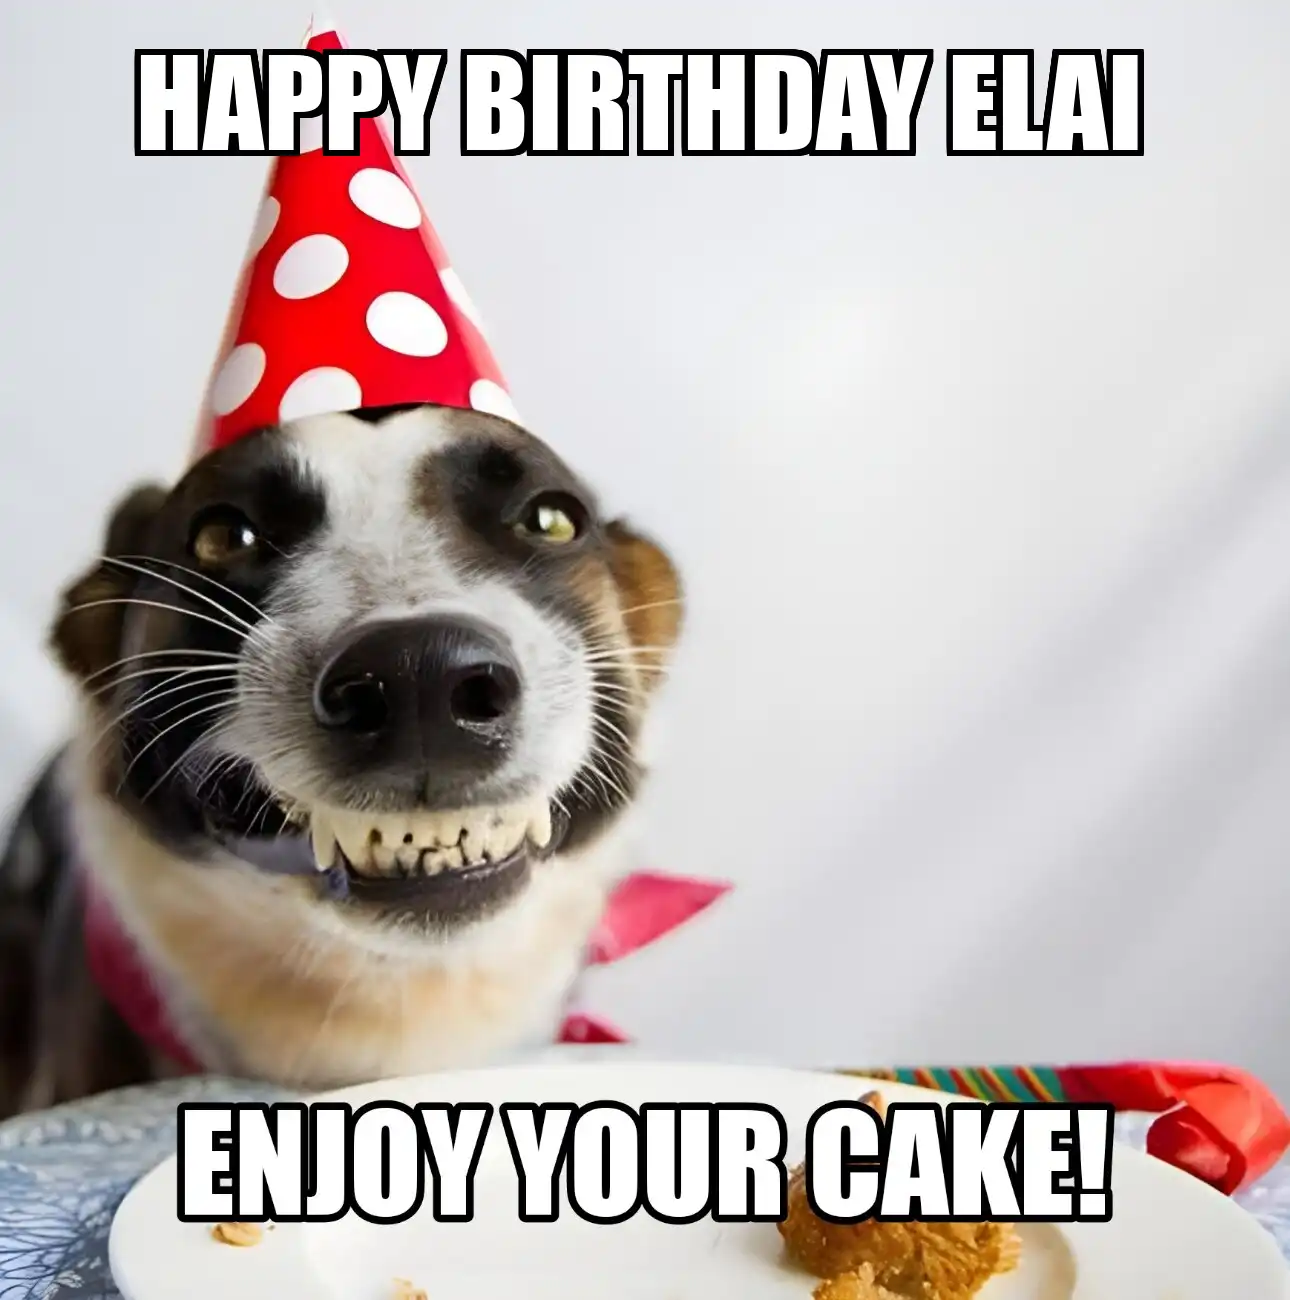 Happy Birthday Elai Enjoy Your Cake Dog Meme